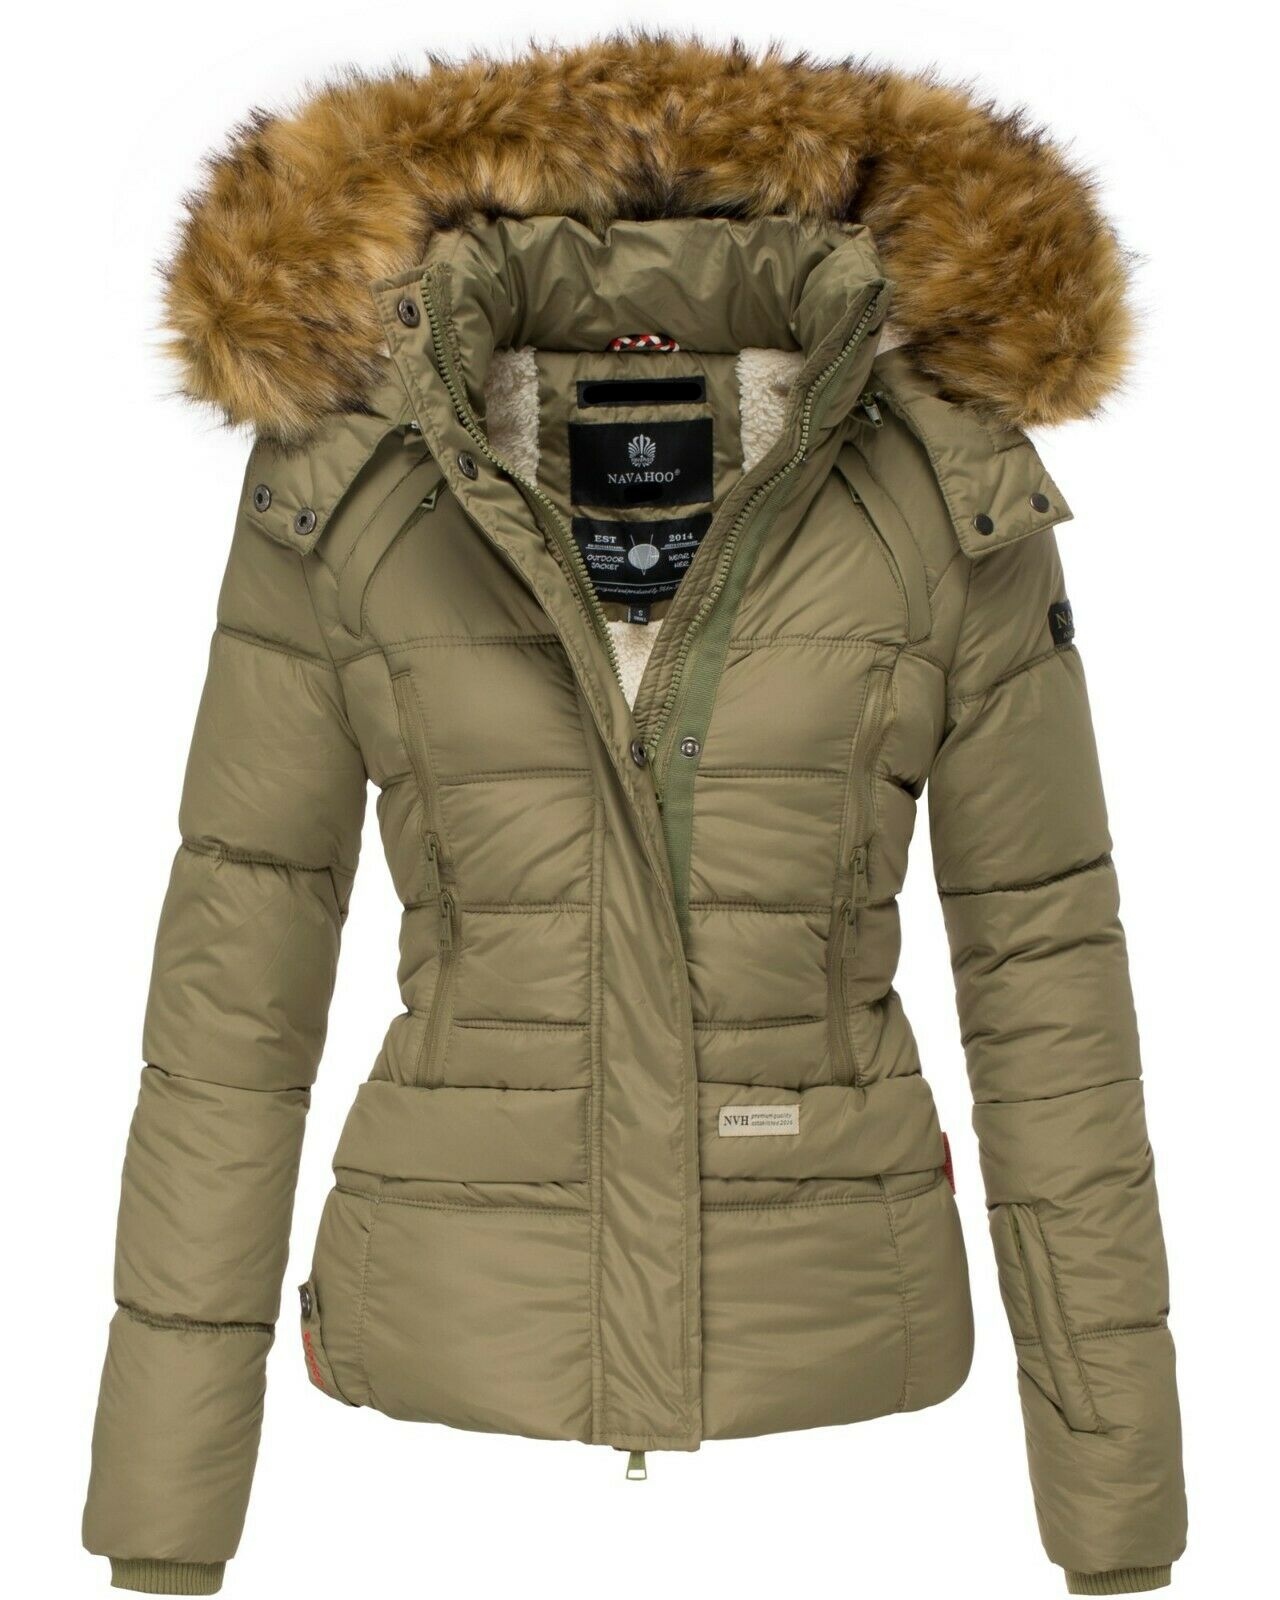 Women's winter short coat to keep warm